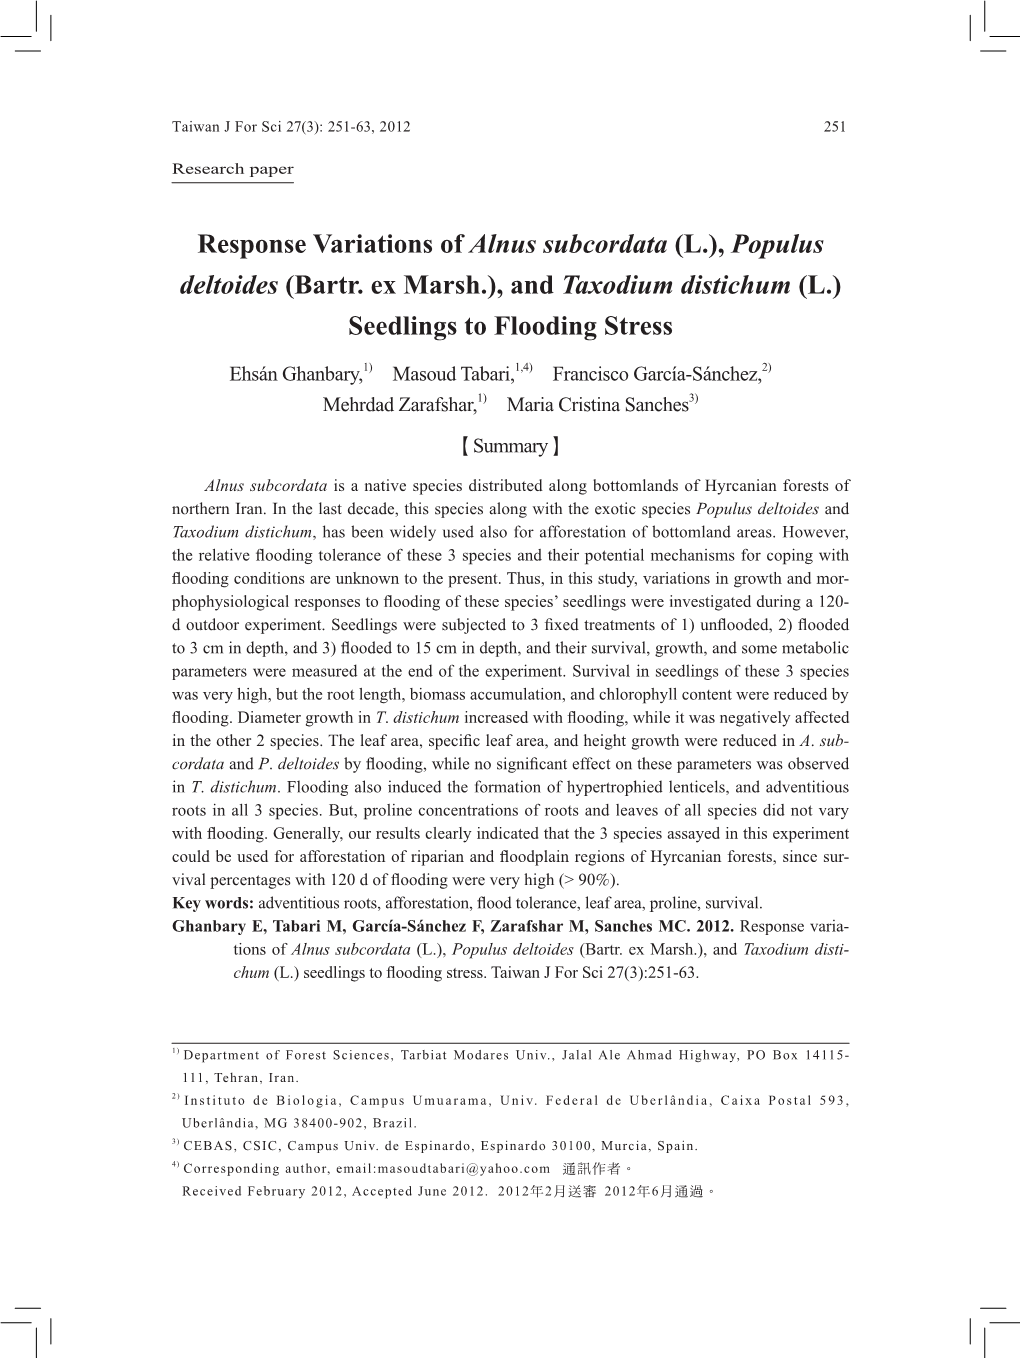 Response Variations of Alnus Subcordata (L.), Populus Deltoides (Bartr